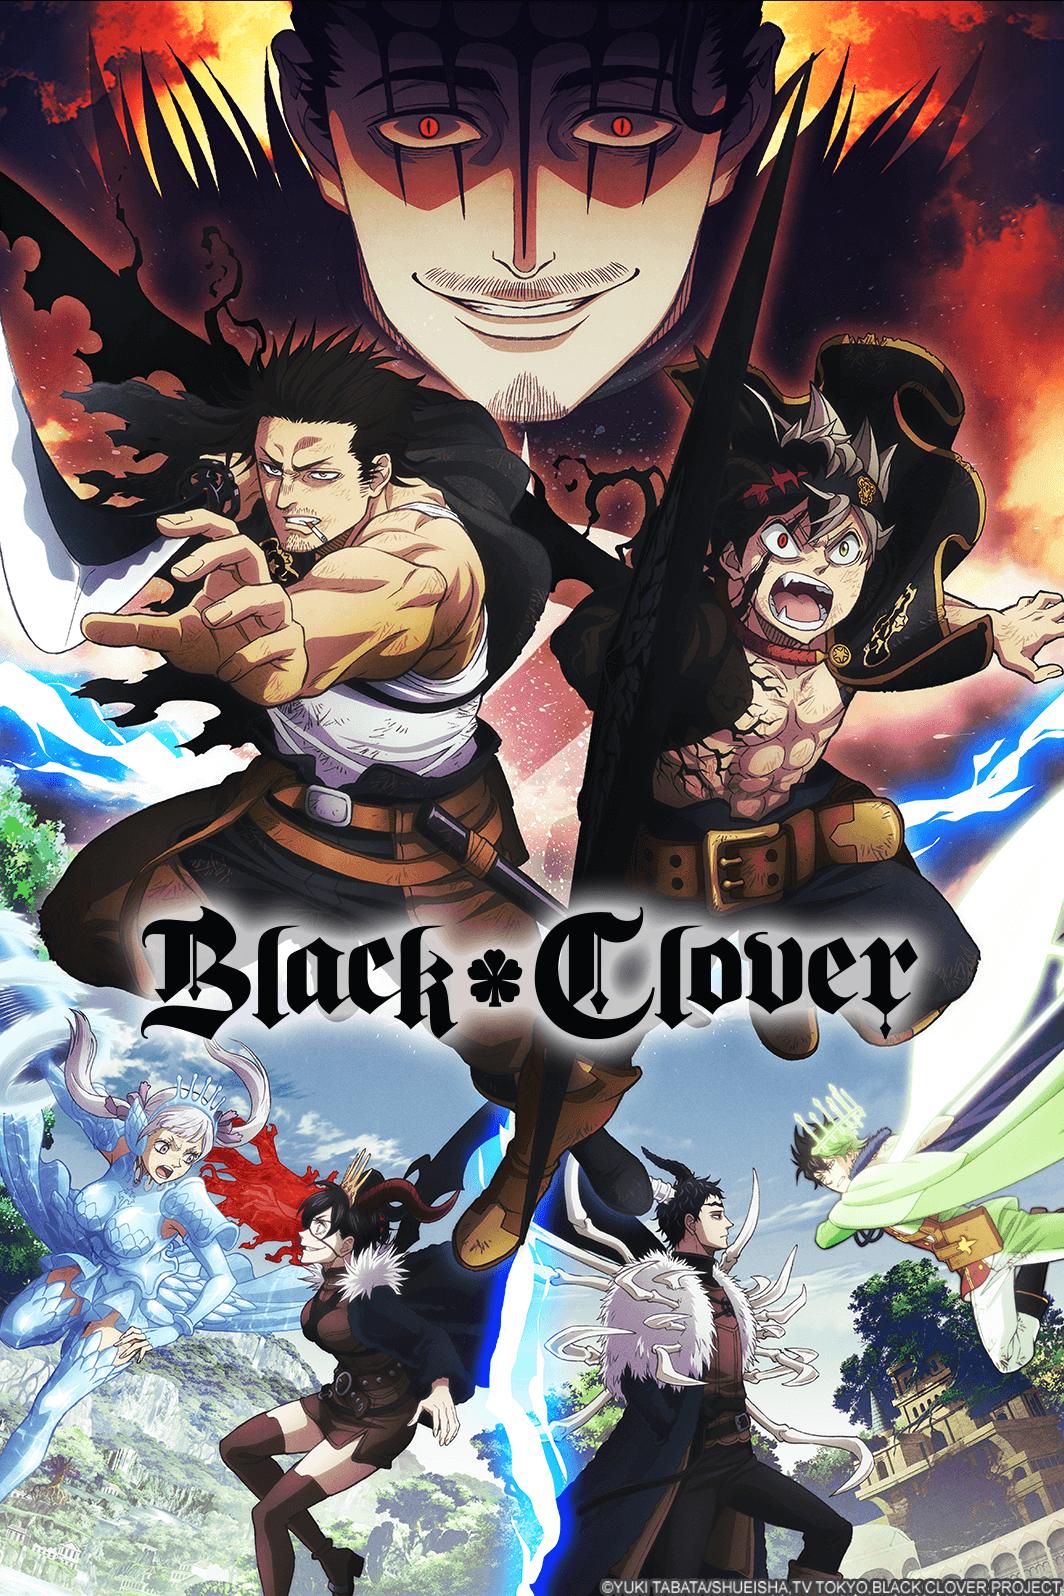 Black clover season 2